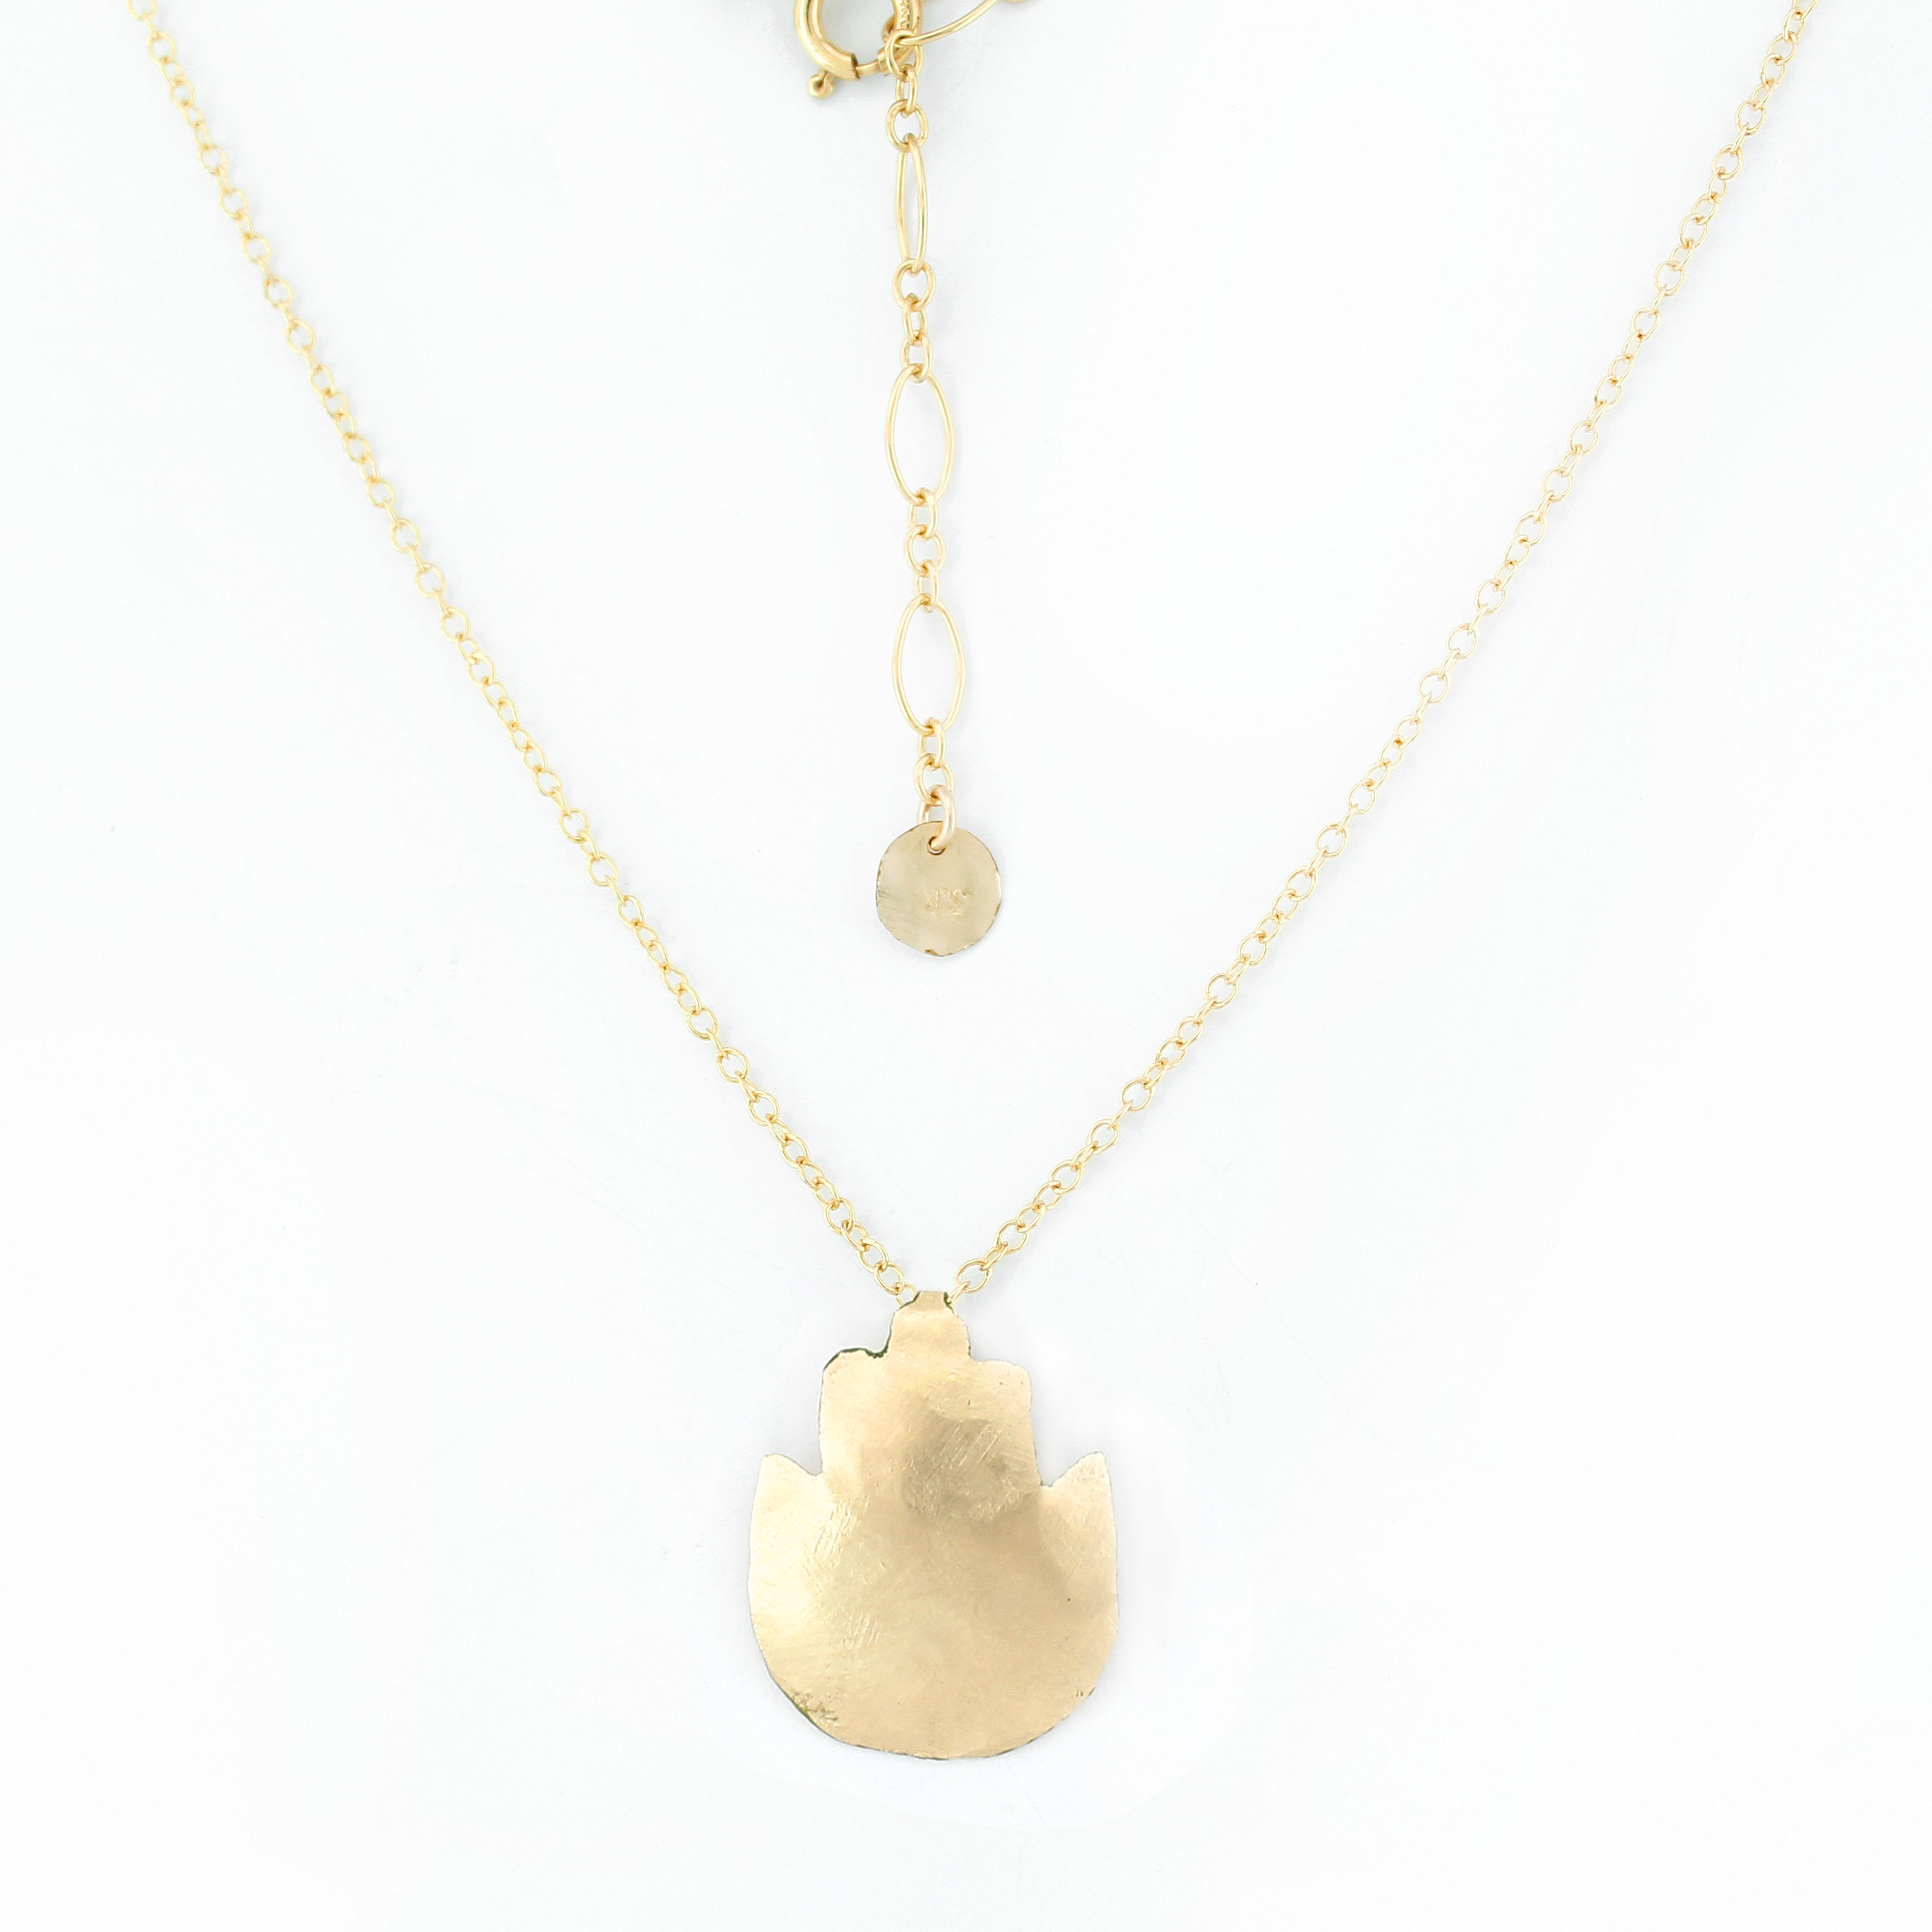 Hamsa Gold filled Necklace - Shulamit Kanter